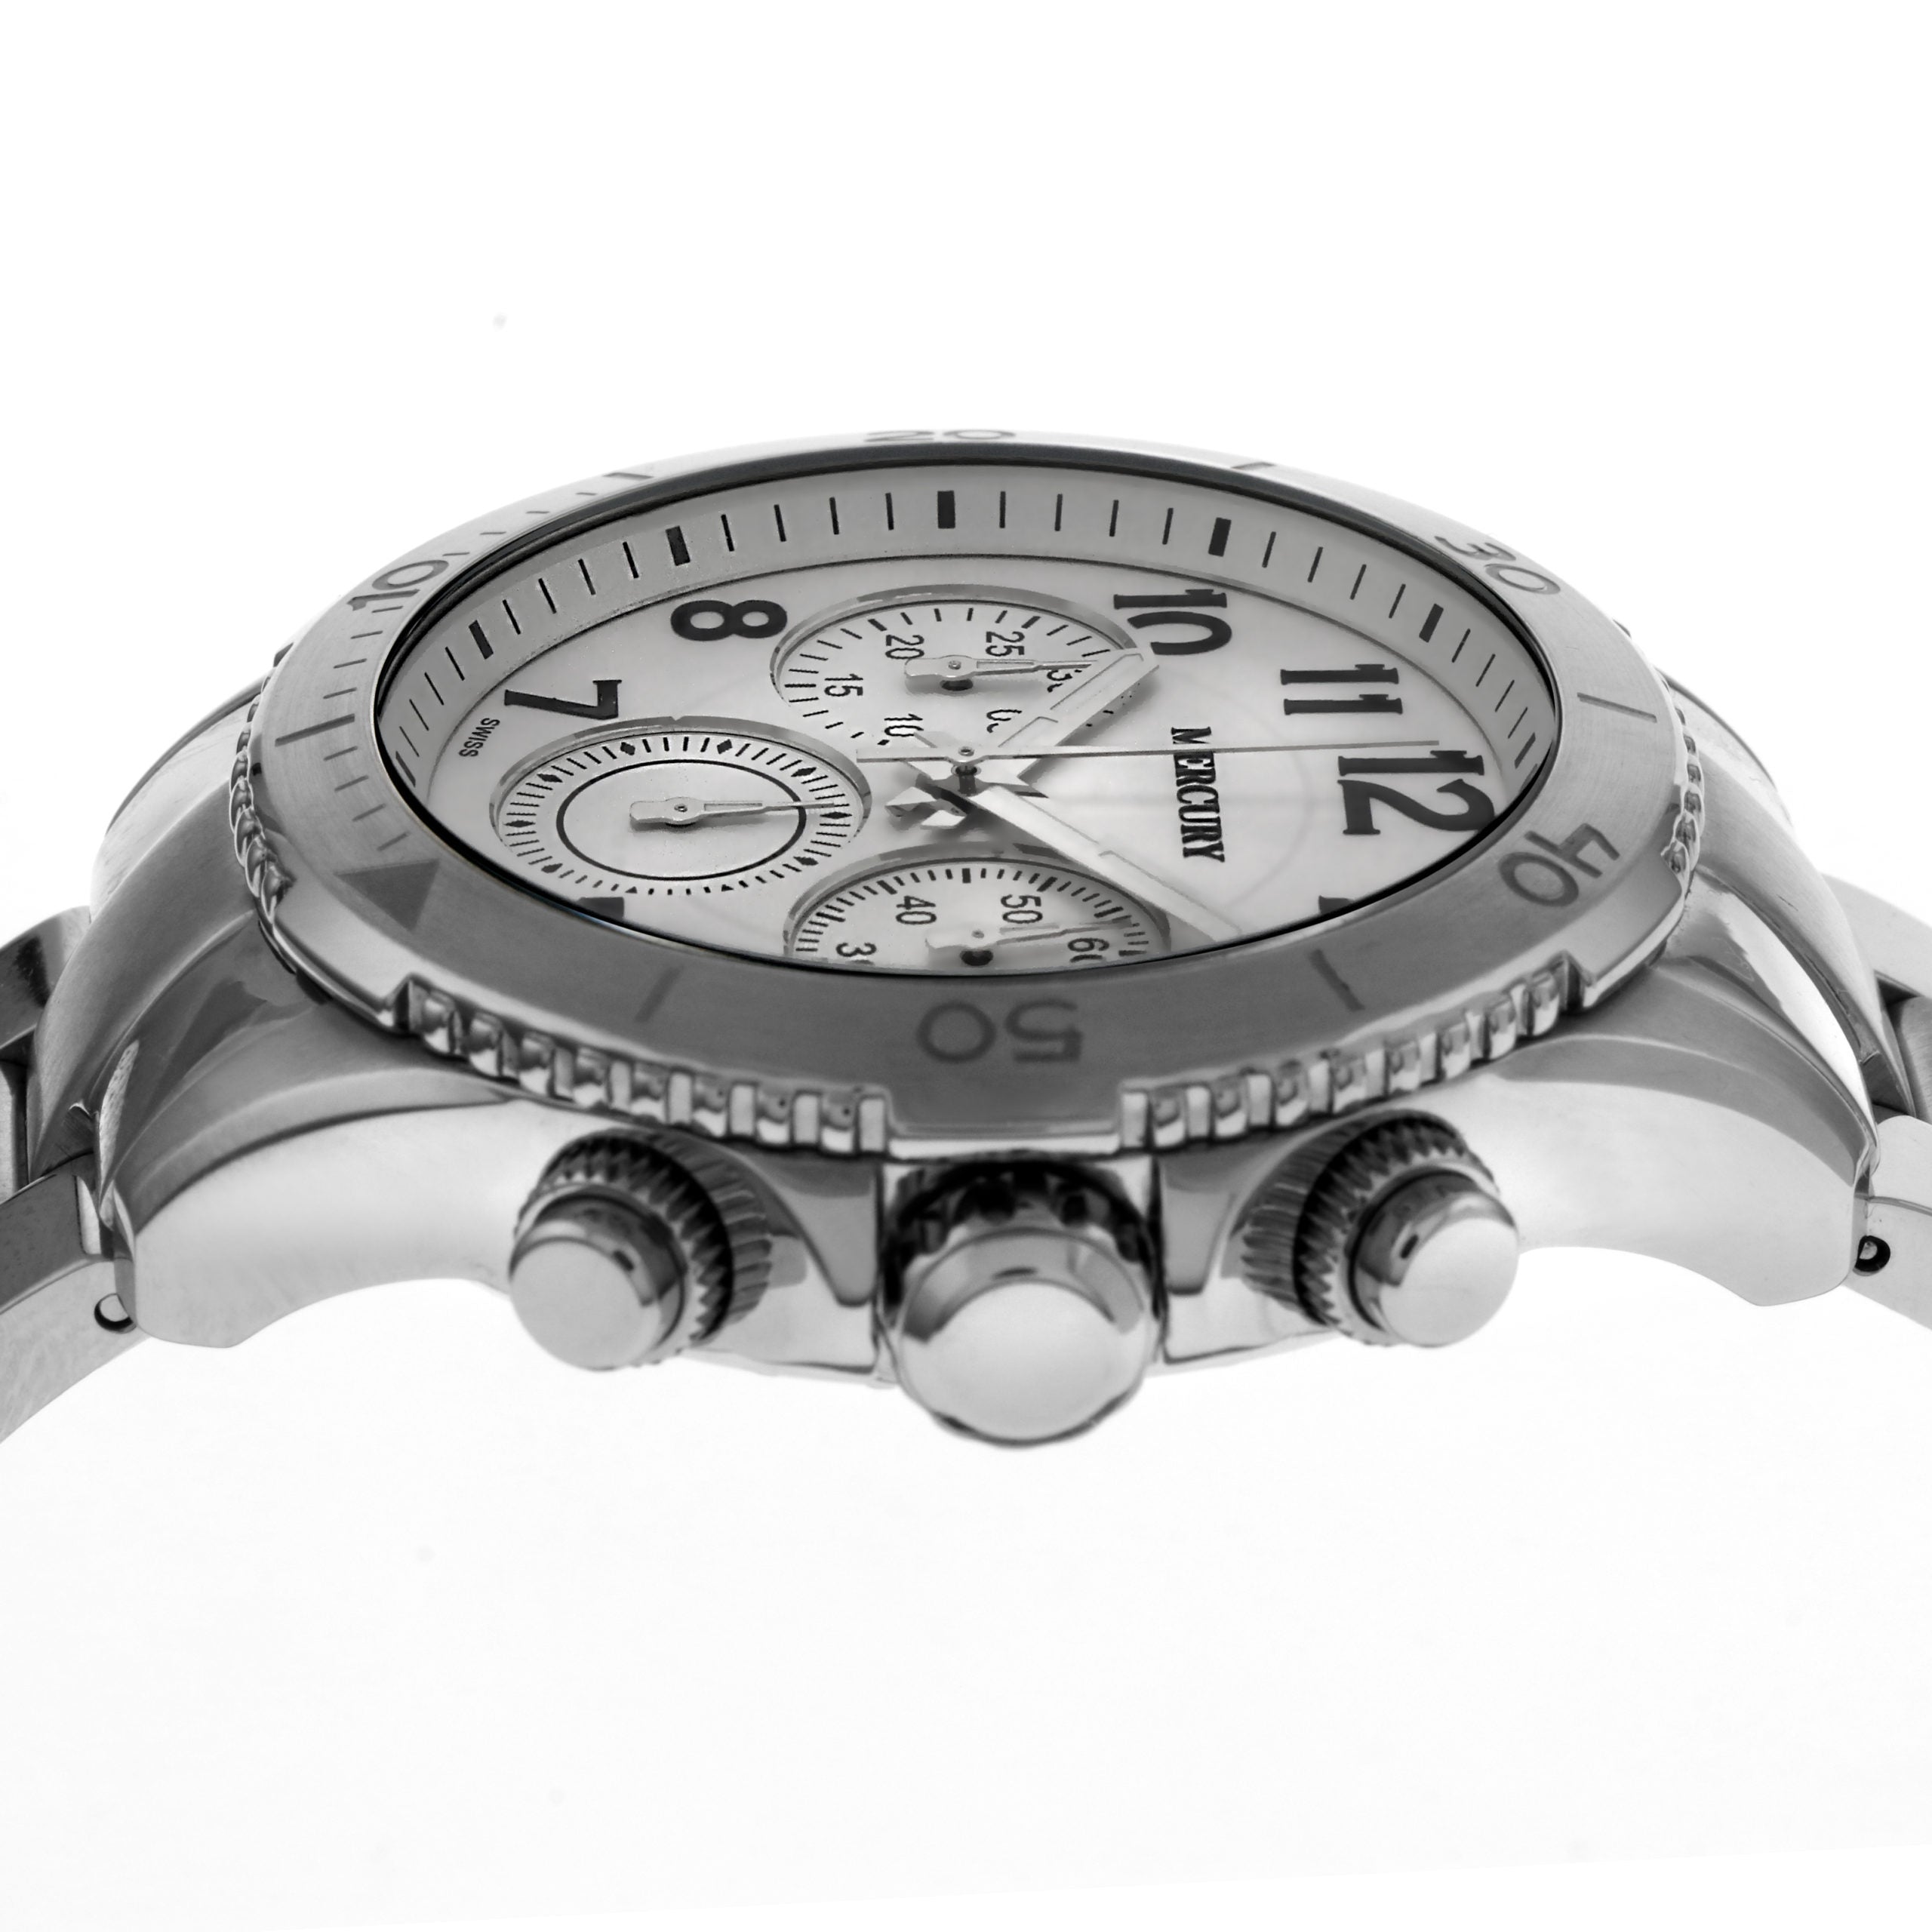 Mercury Men's Swiss Quartz Watch with White Dial - MER-0006